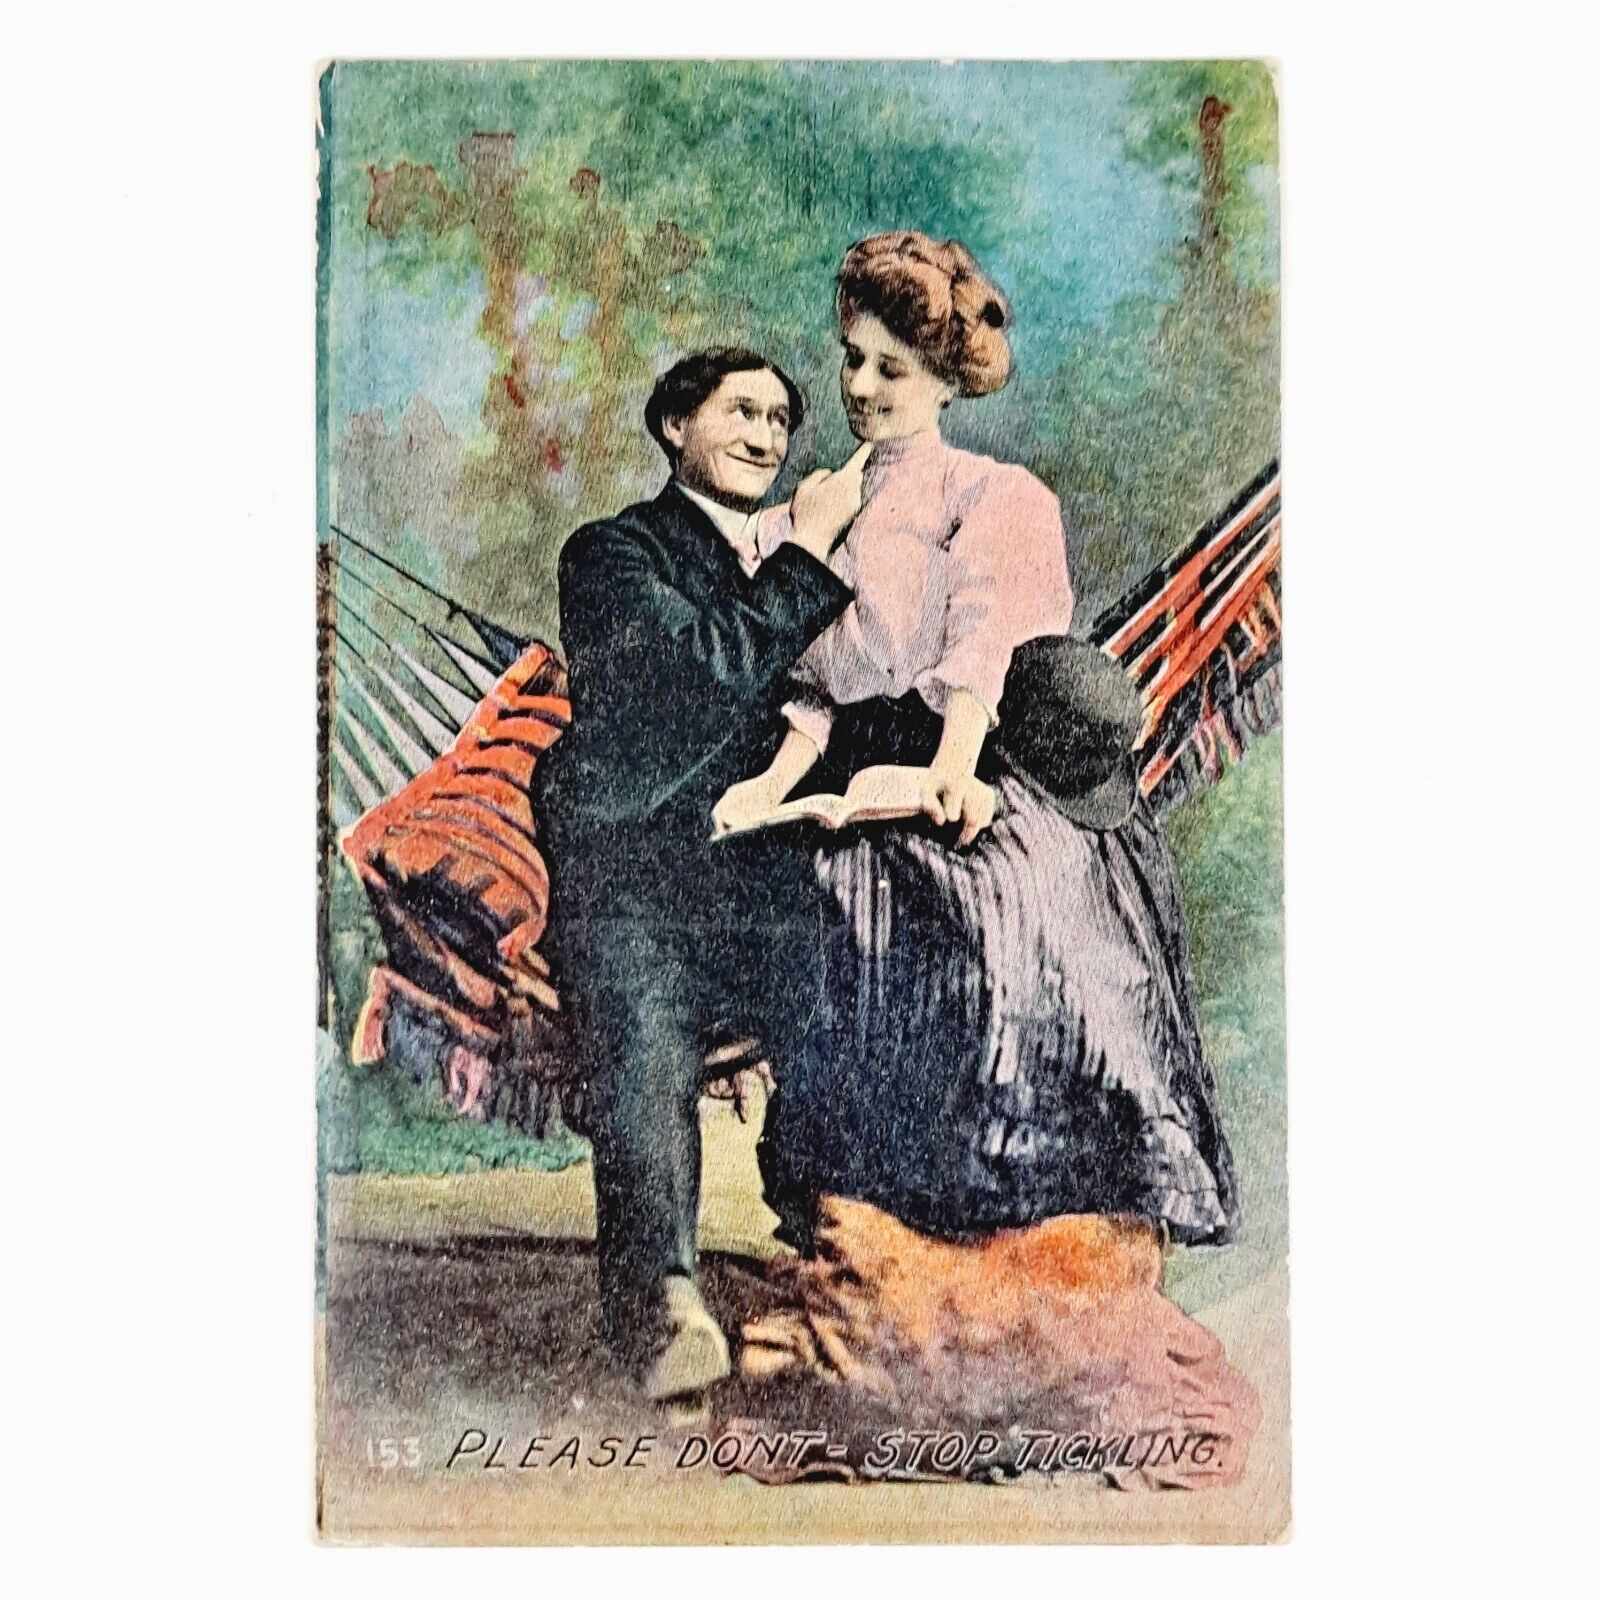 ANTIQUE 1909 X. L. COMICS POST CARD LOVE & ROMANCE COURTSHIP POSTCARD - POSTED